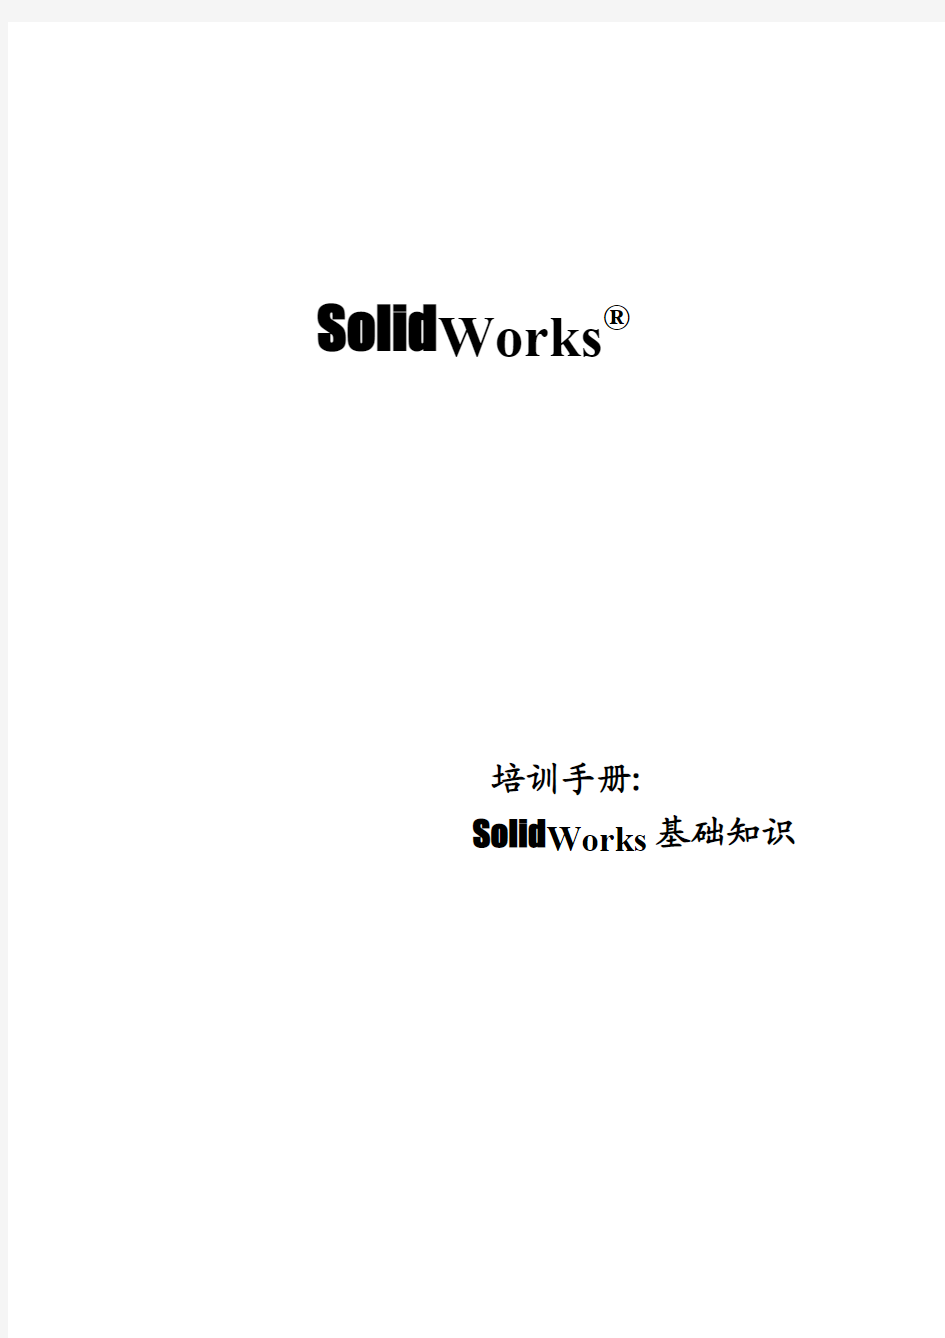 Solidworks高级培训手册-基础知识